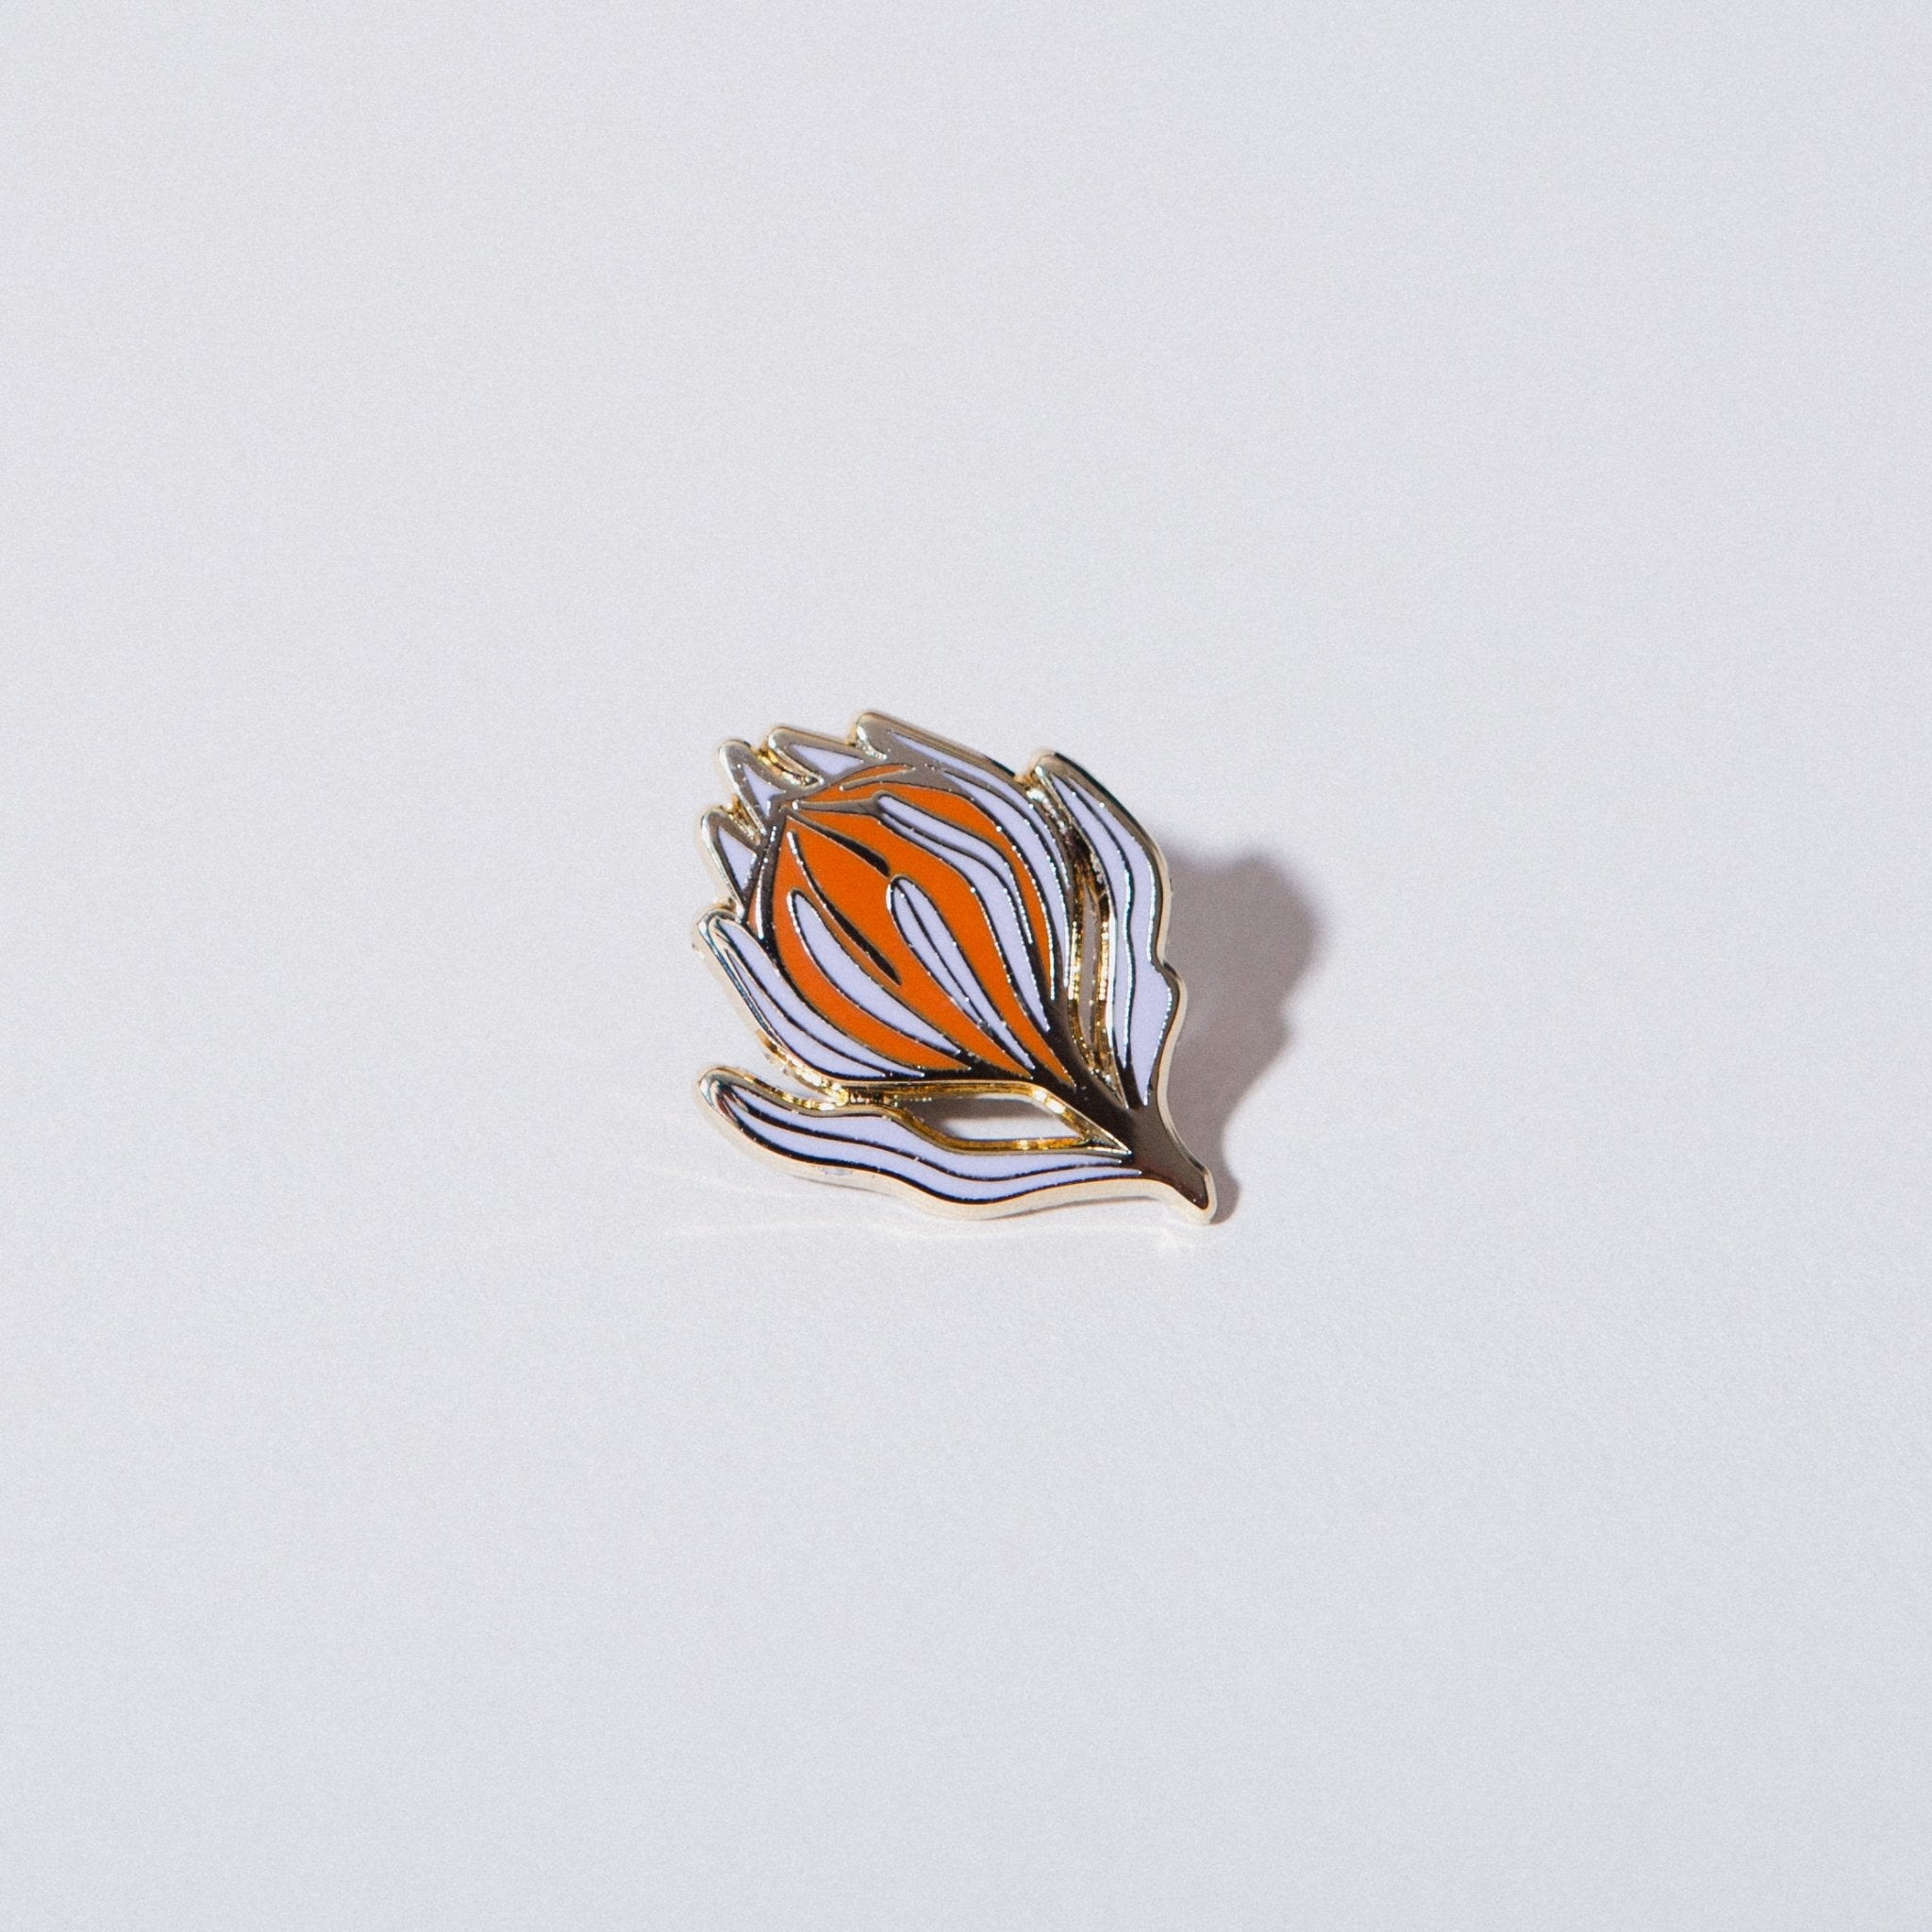 Protea Flower Pin - Case Study